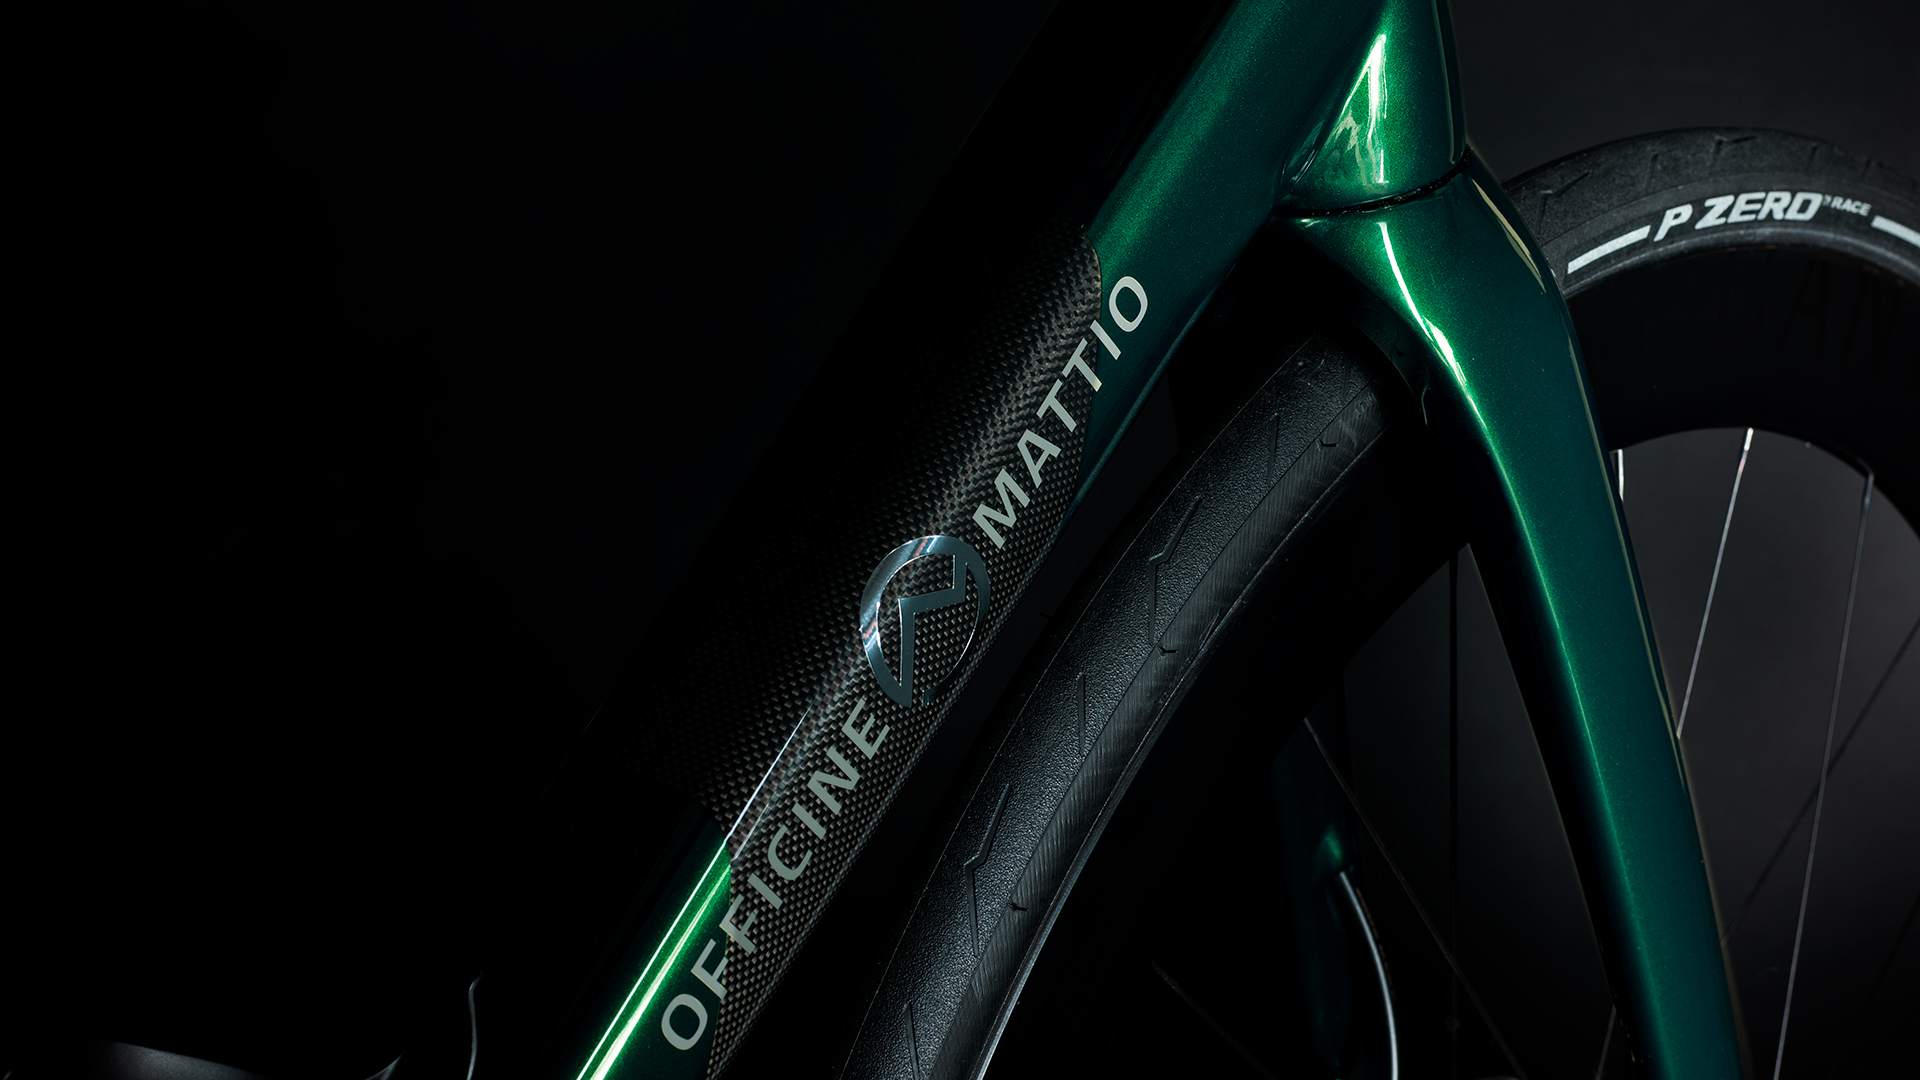 Bici verde metallizzato. Modello Lemma RT